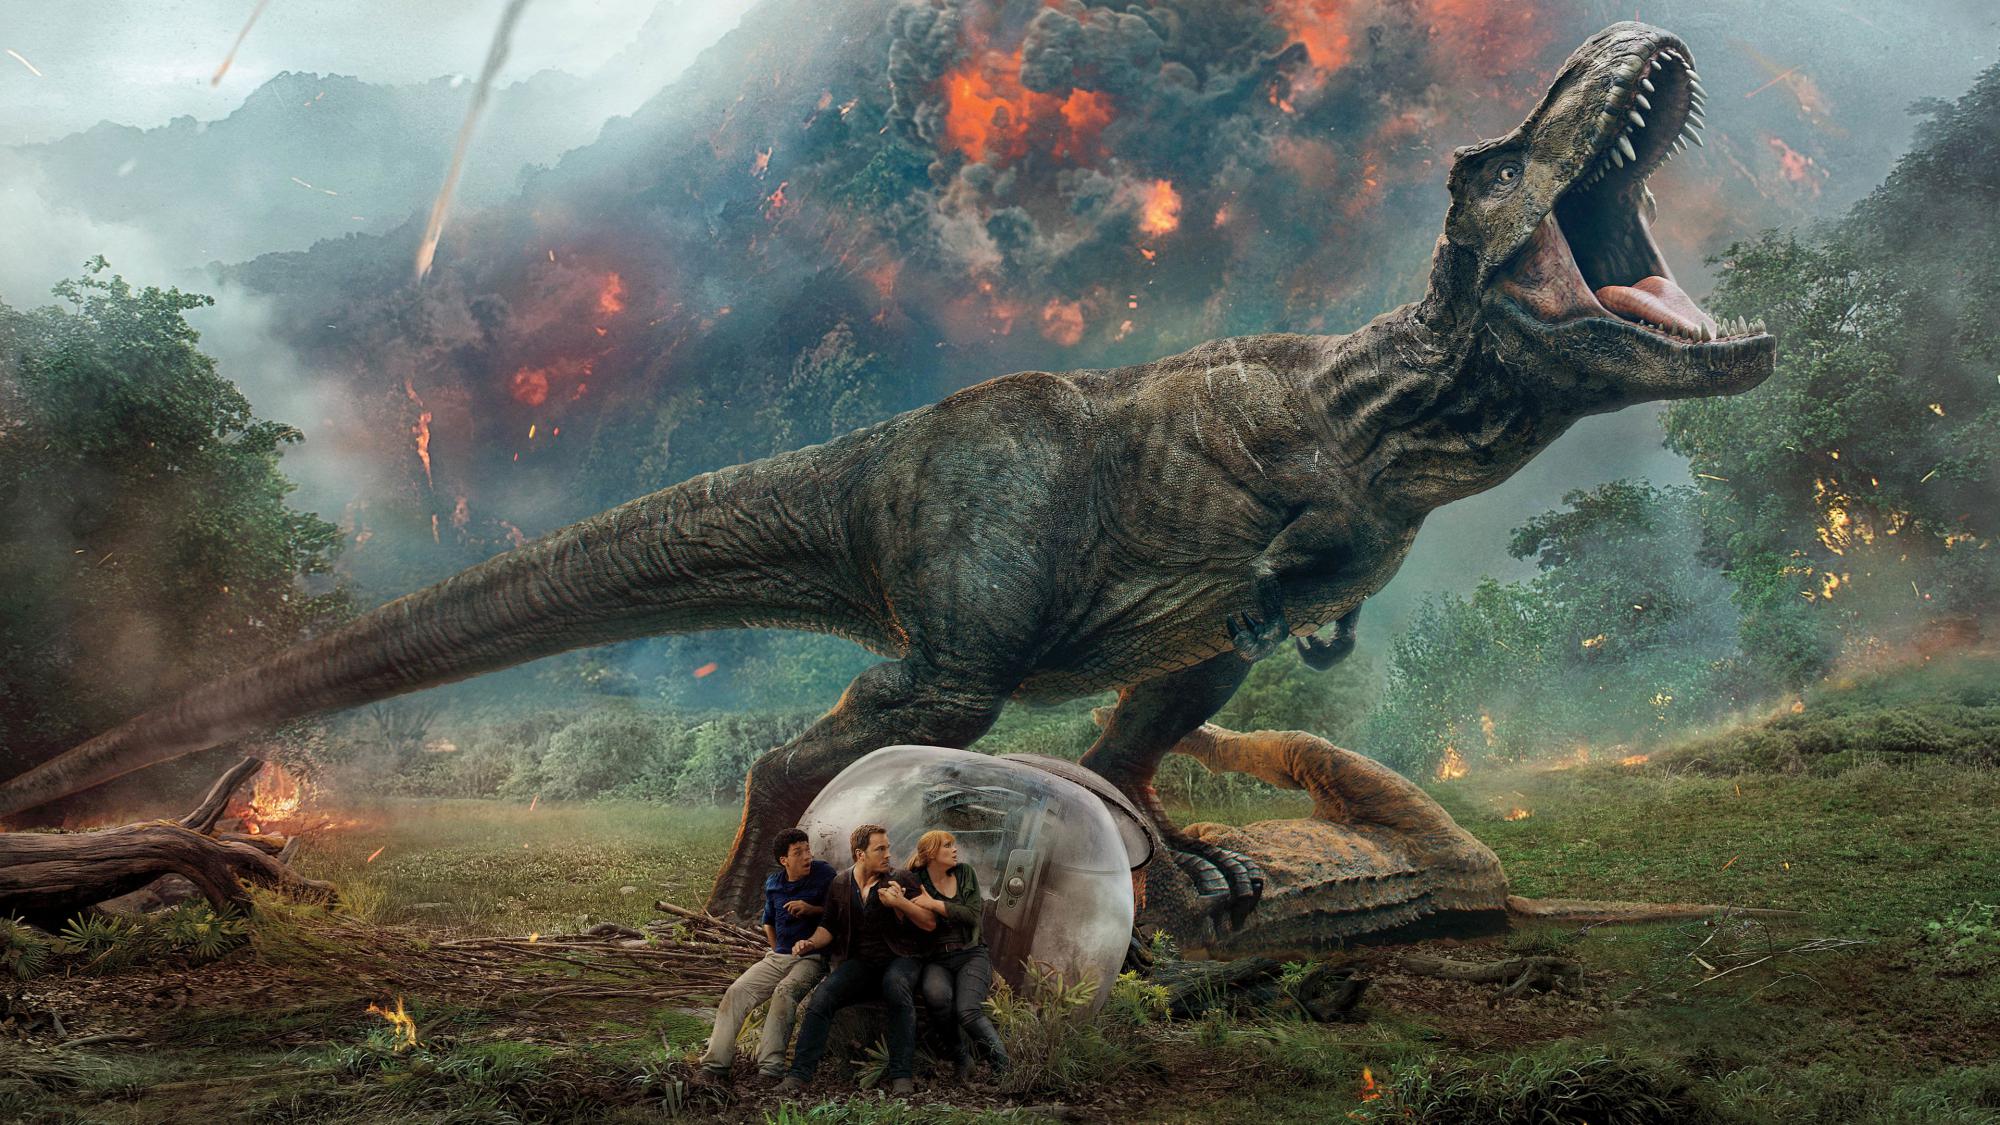 Backdrop Image for Jurassic World: Fallen Kingdom